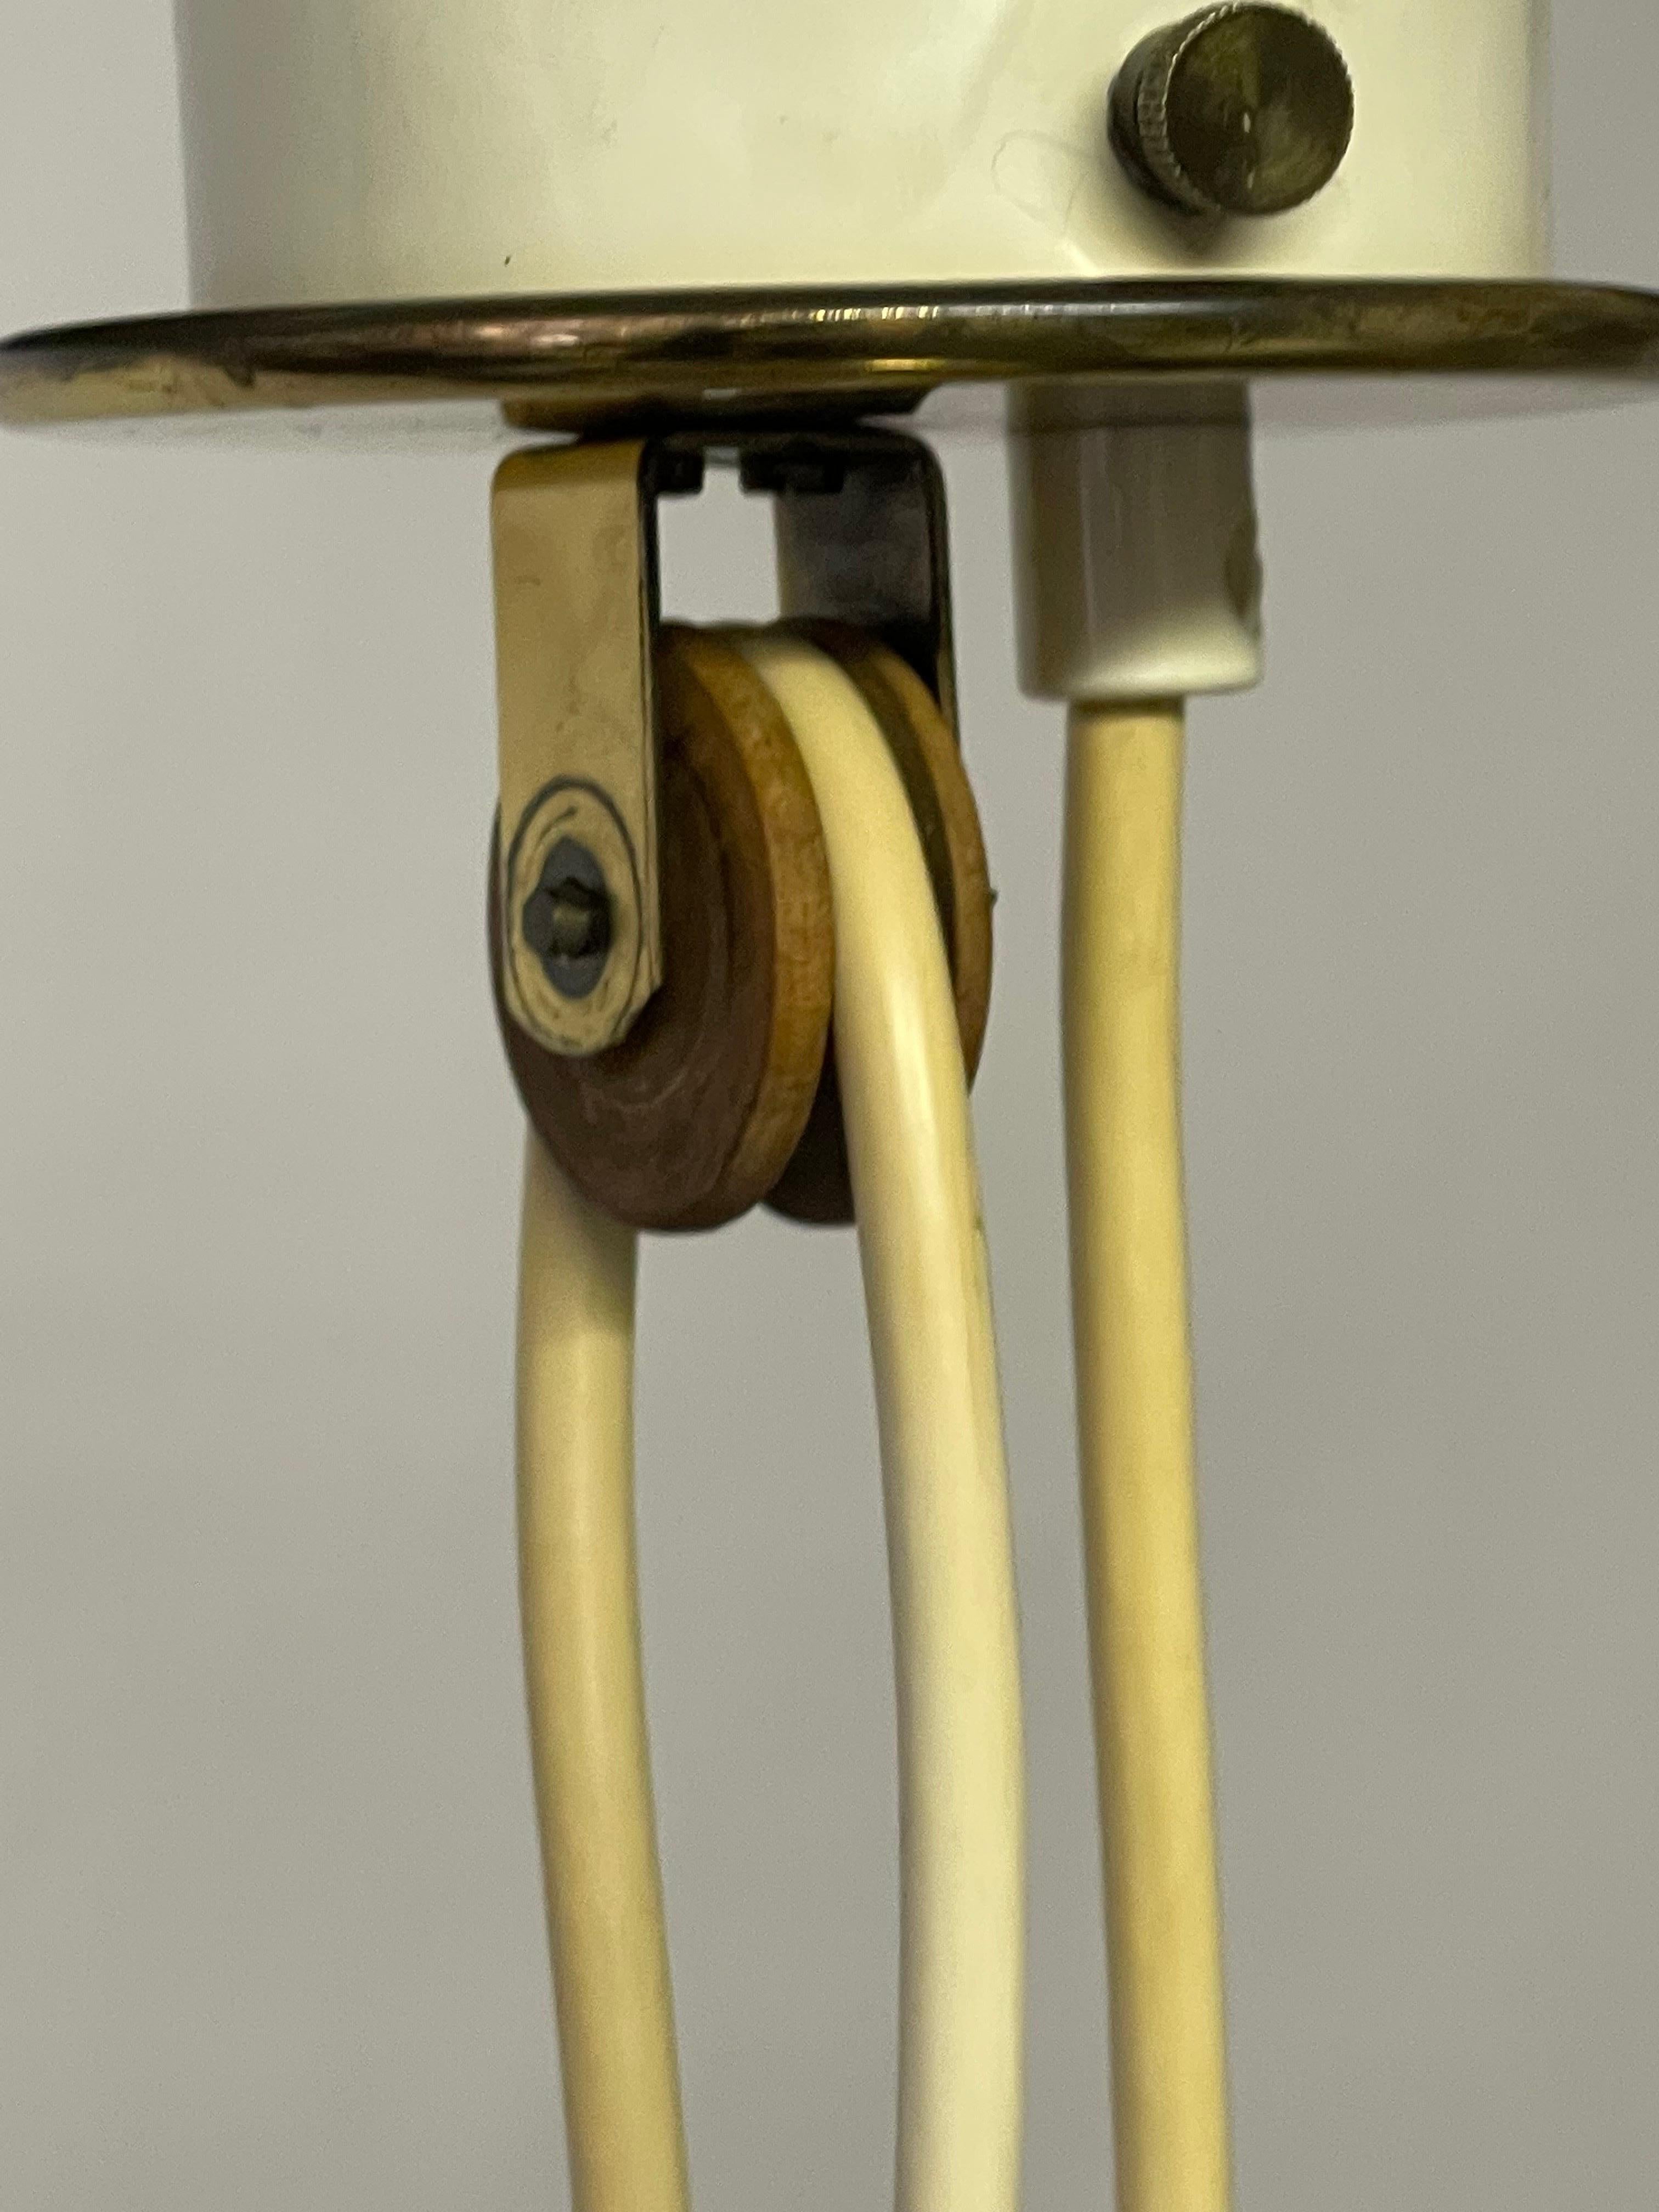 Very Rare Suspension Lamp by Gino Sarfatti for Arteluce, Italy, circa 1950s For Sale 4